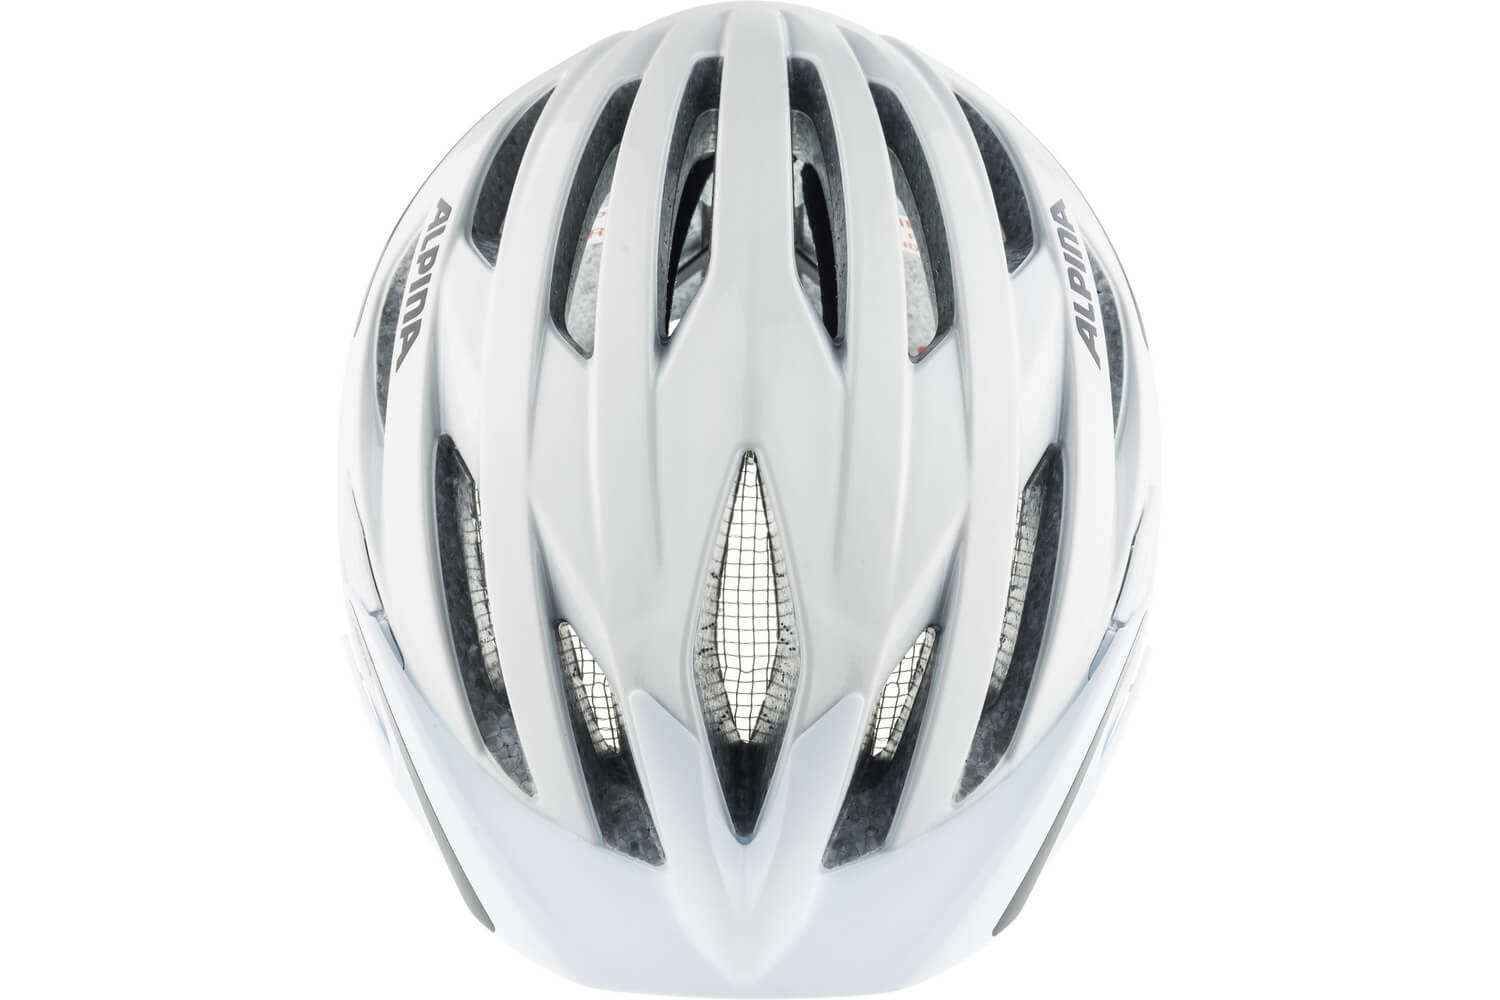 Alpina HAGA Fahrrad-Helm  